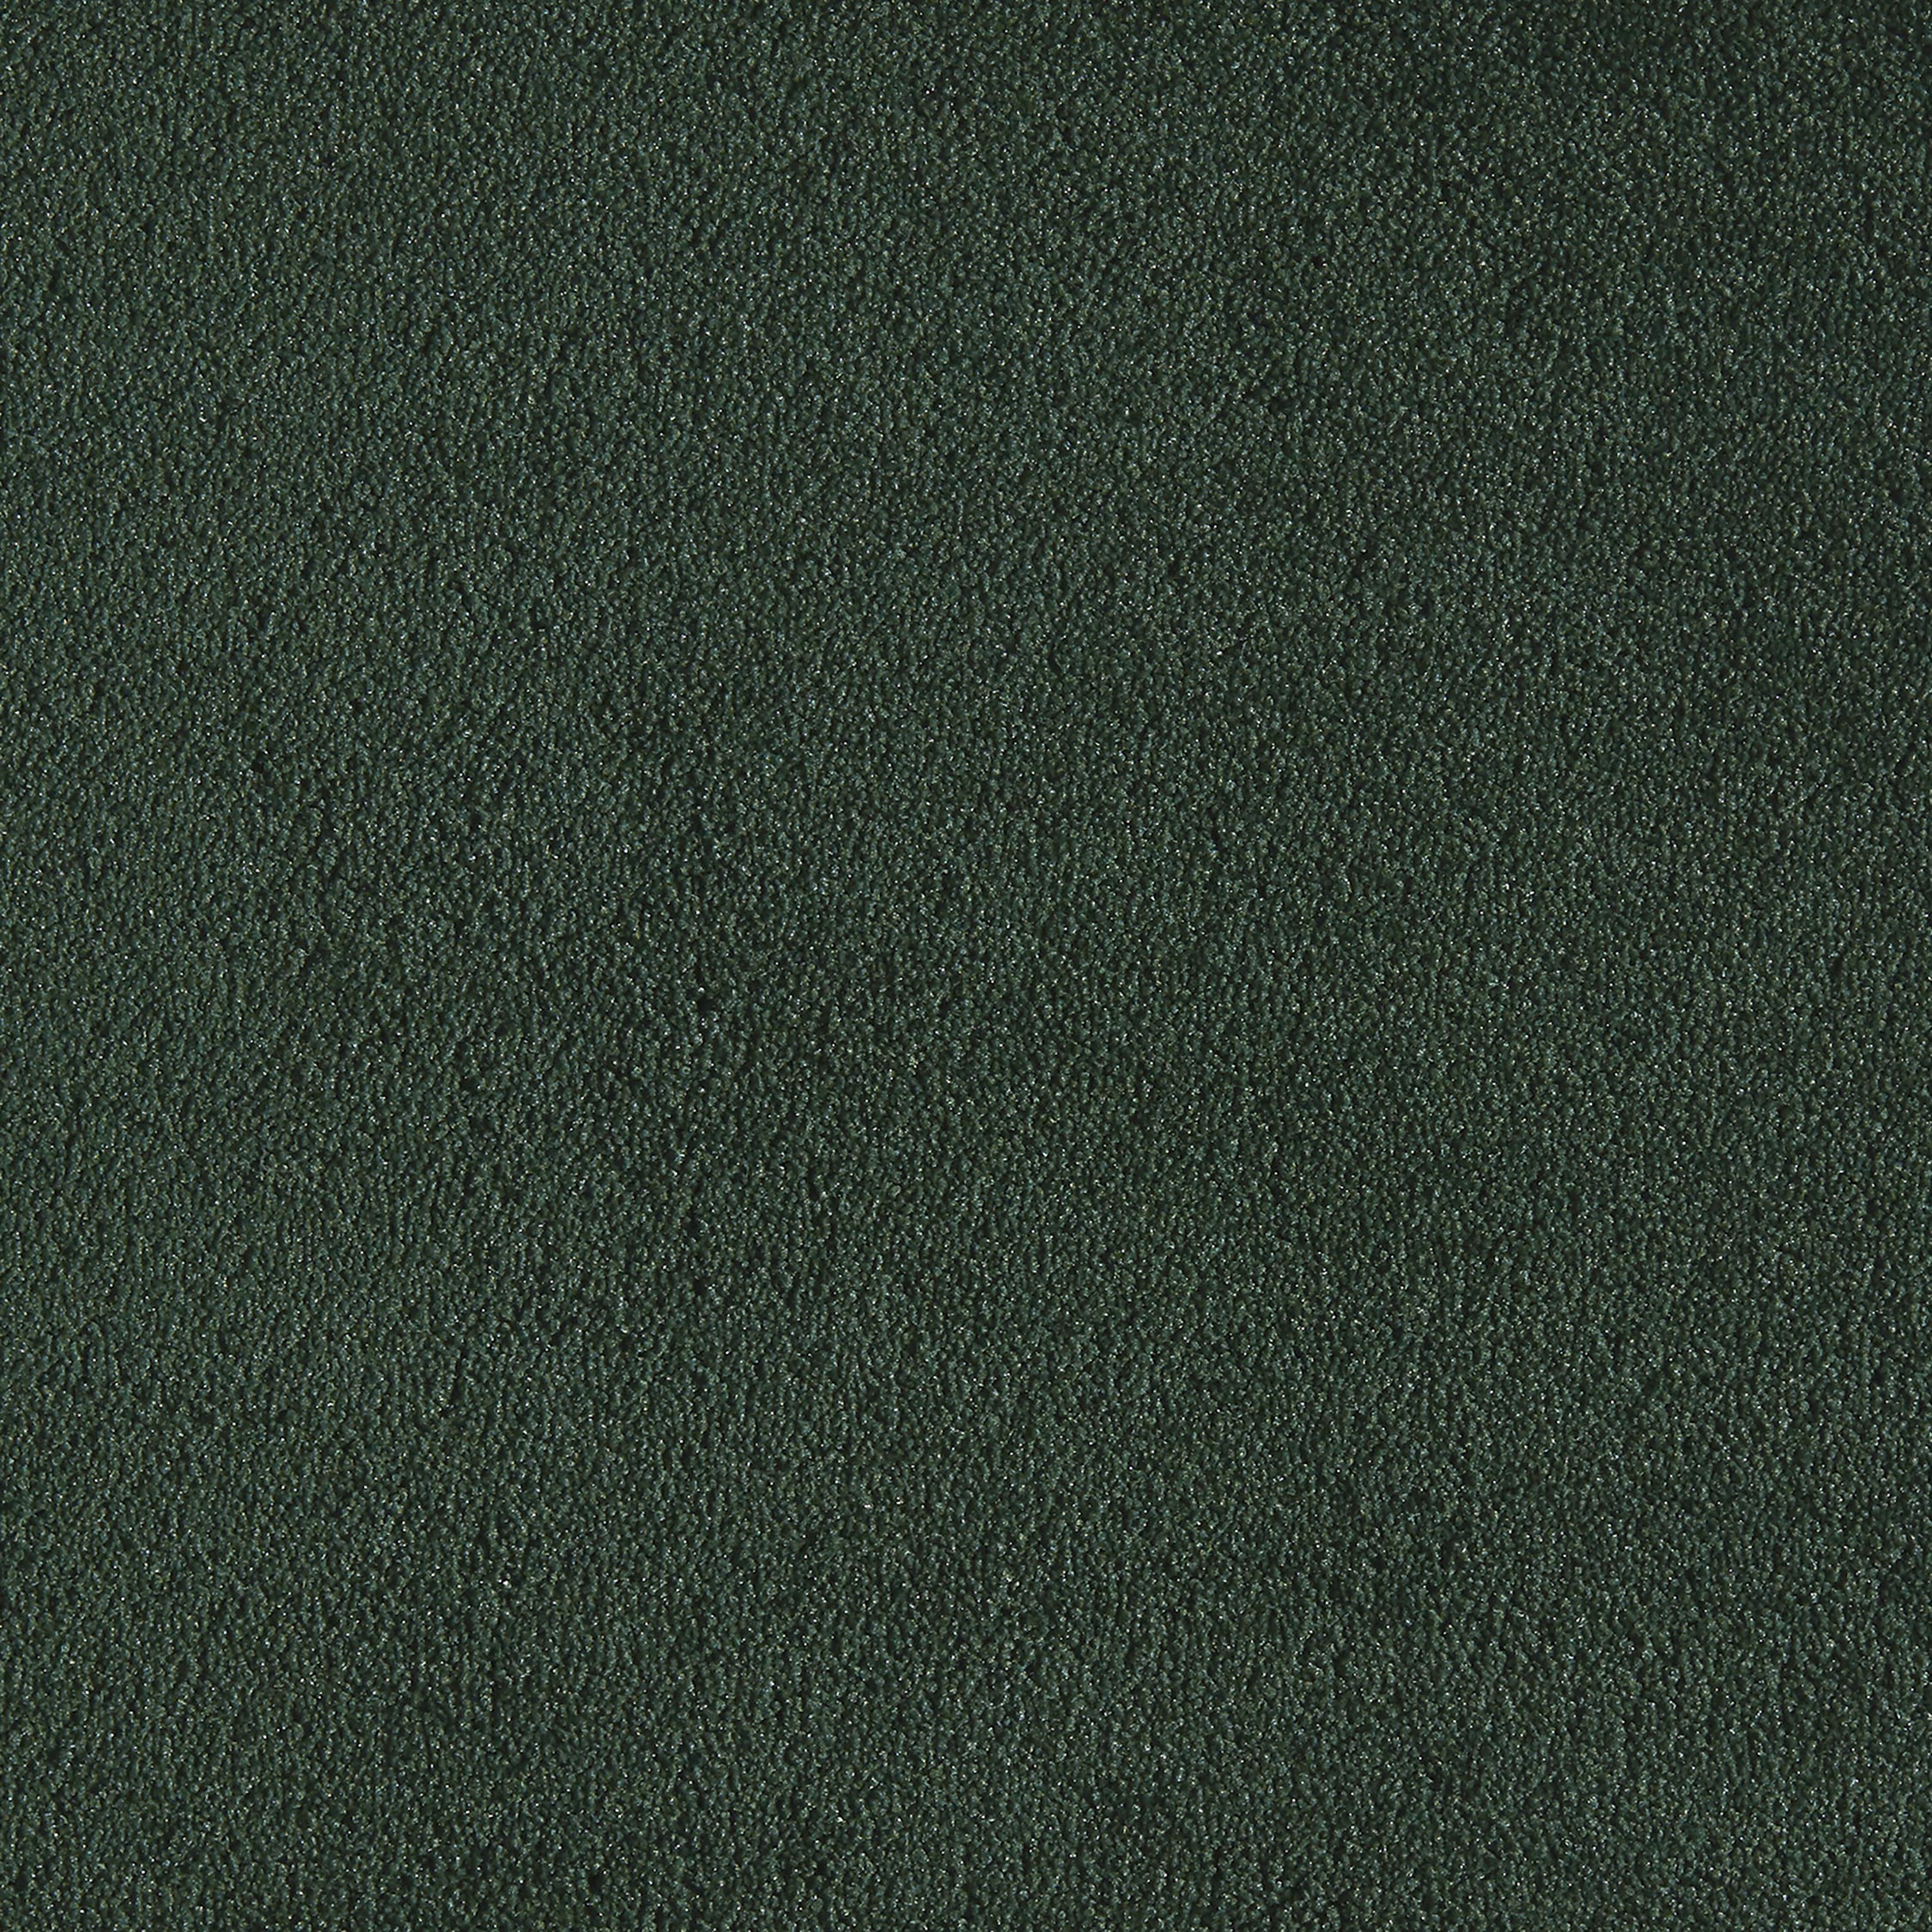 Texture 2000 emerald green